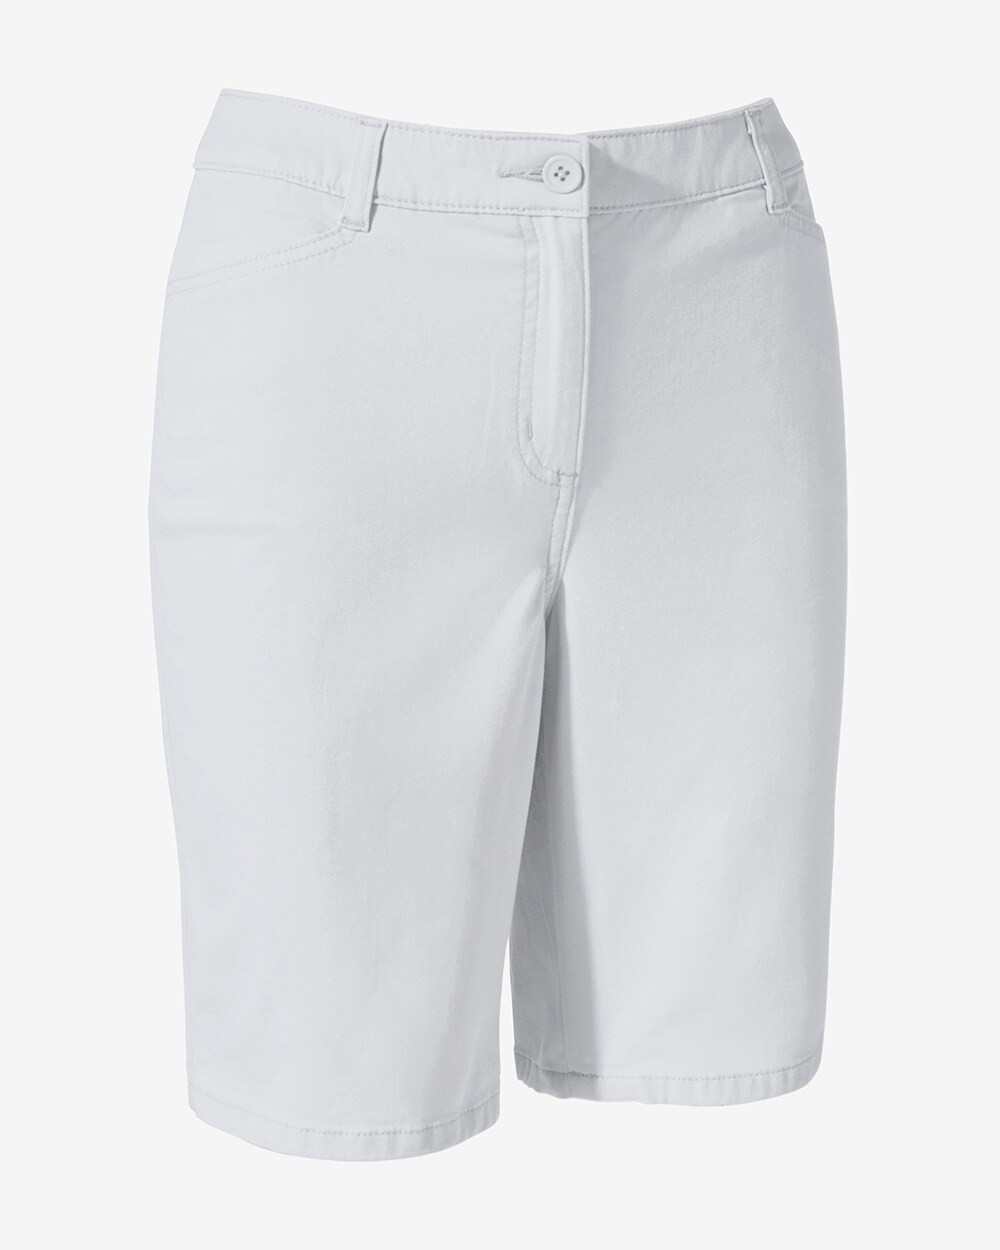 Twill Chino Shorts- 9.5 Inch Inseam